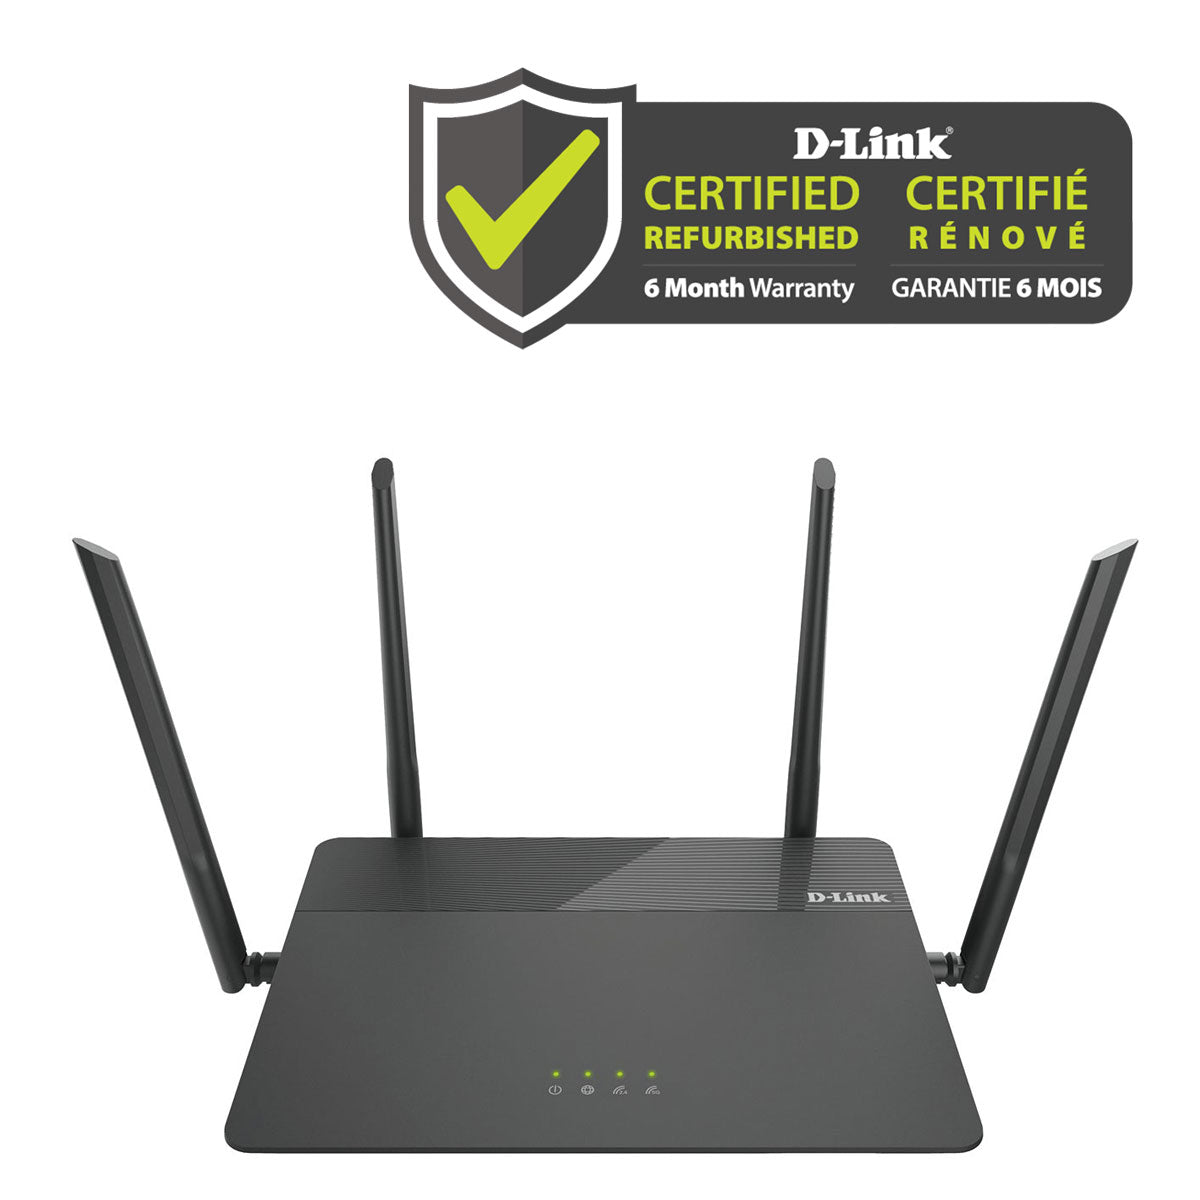 [Certified Refurbished] D-Link AC1900 High Power Wi-Fi Gigabit Router - DIR-878/RE